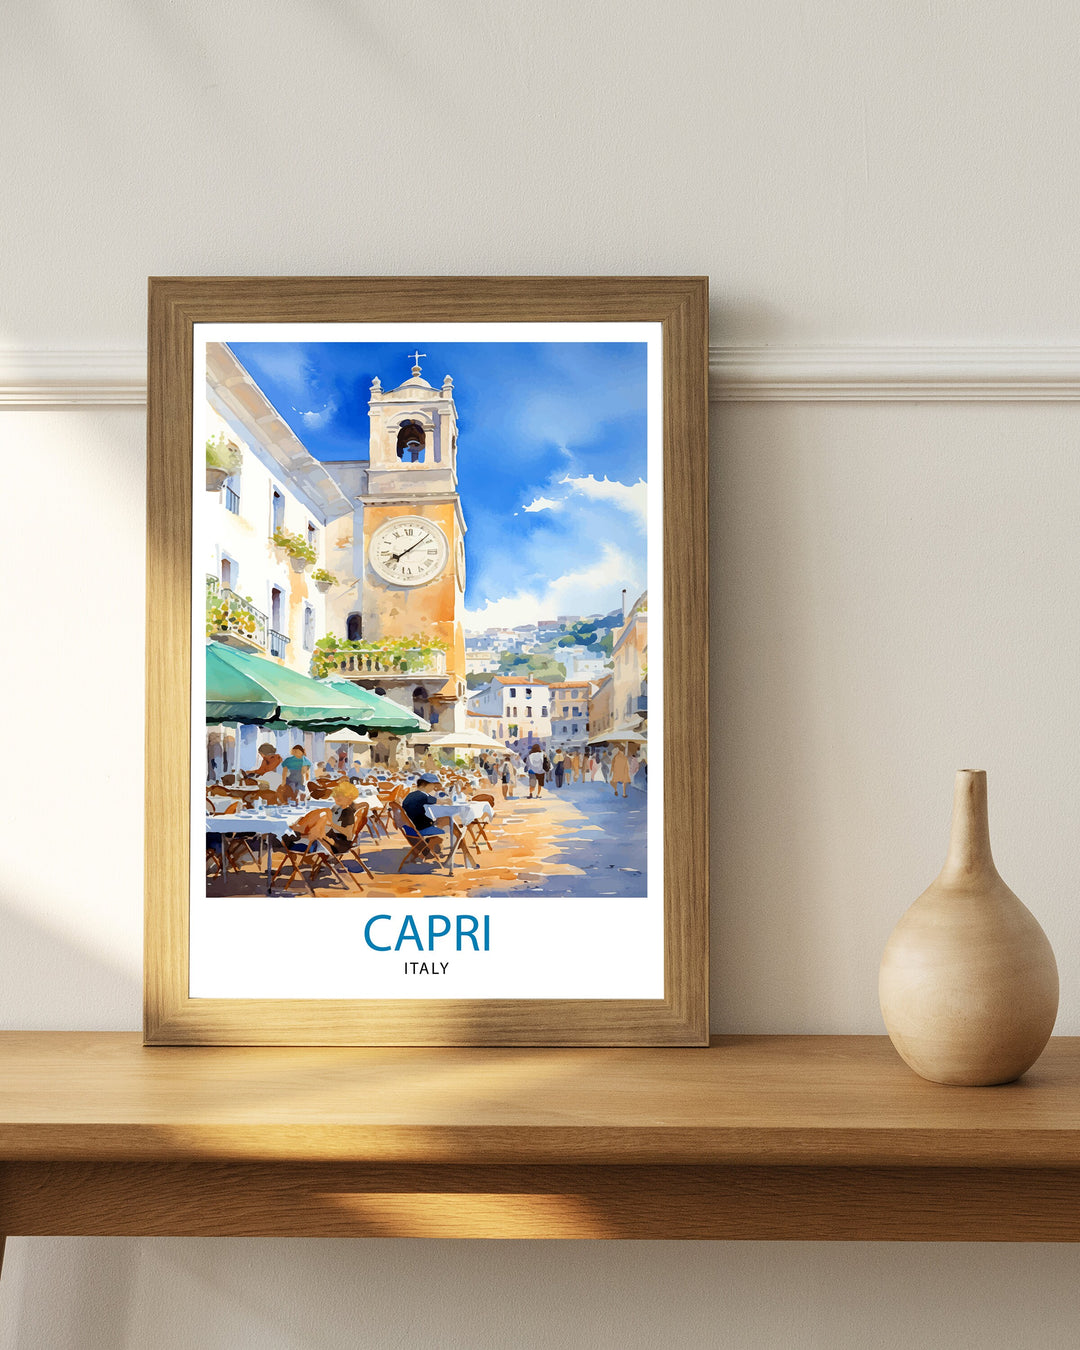 Capri Italy Travel Poster Capri Wall Decor Capri Home Living Decor Capri Italy Illustration Travel Poster Gift for Capri Italy Home Decor